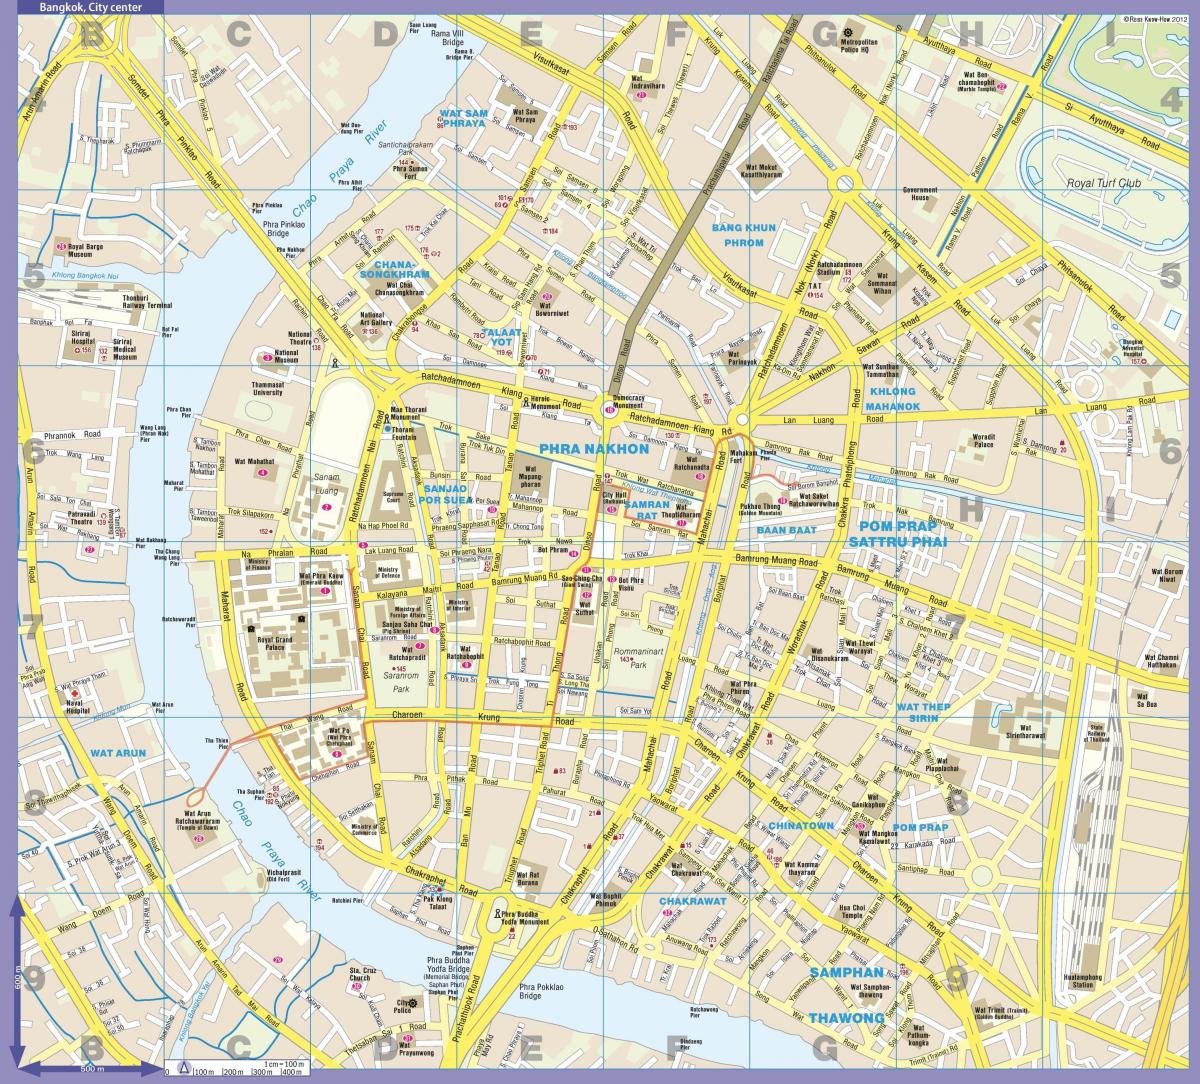 Bangkok (Krung Thep) city center map